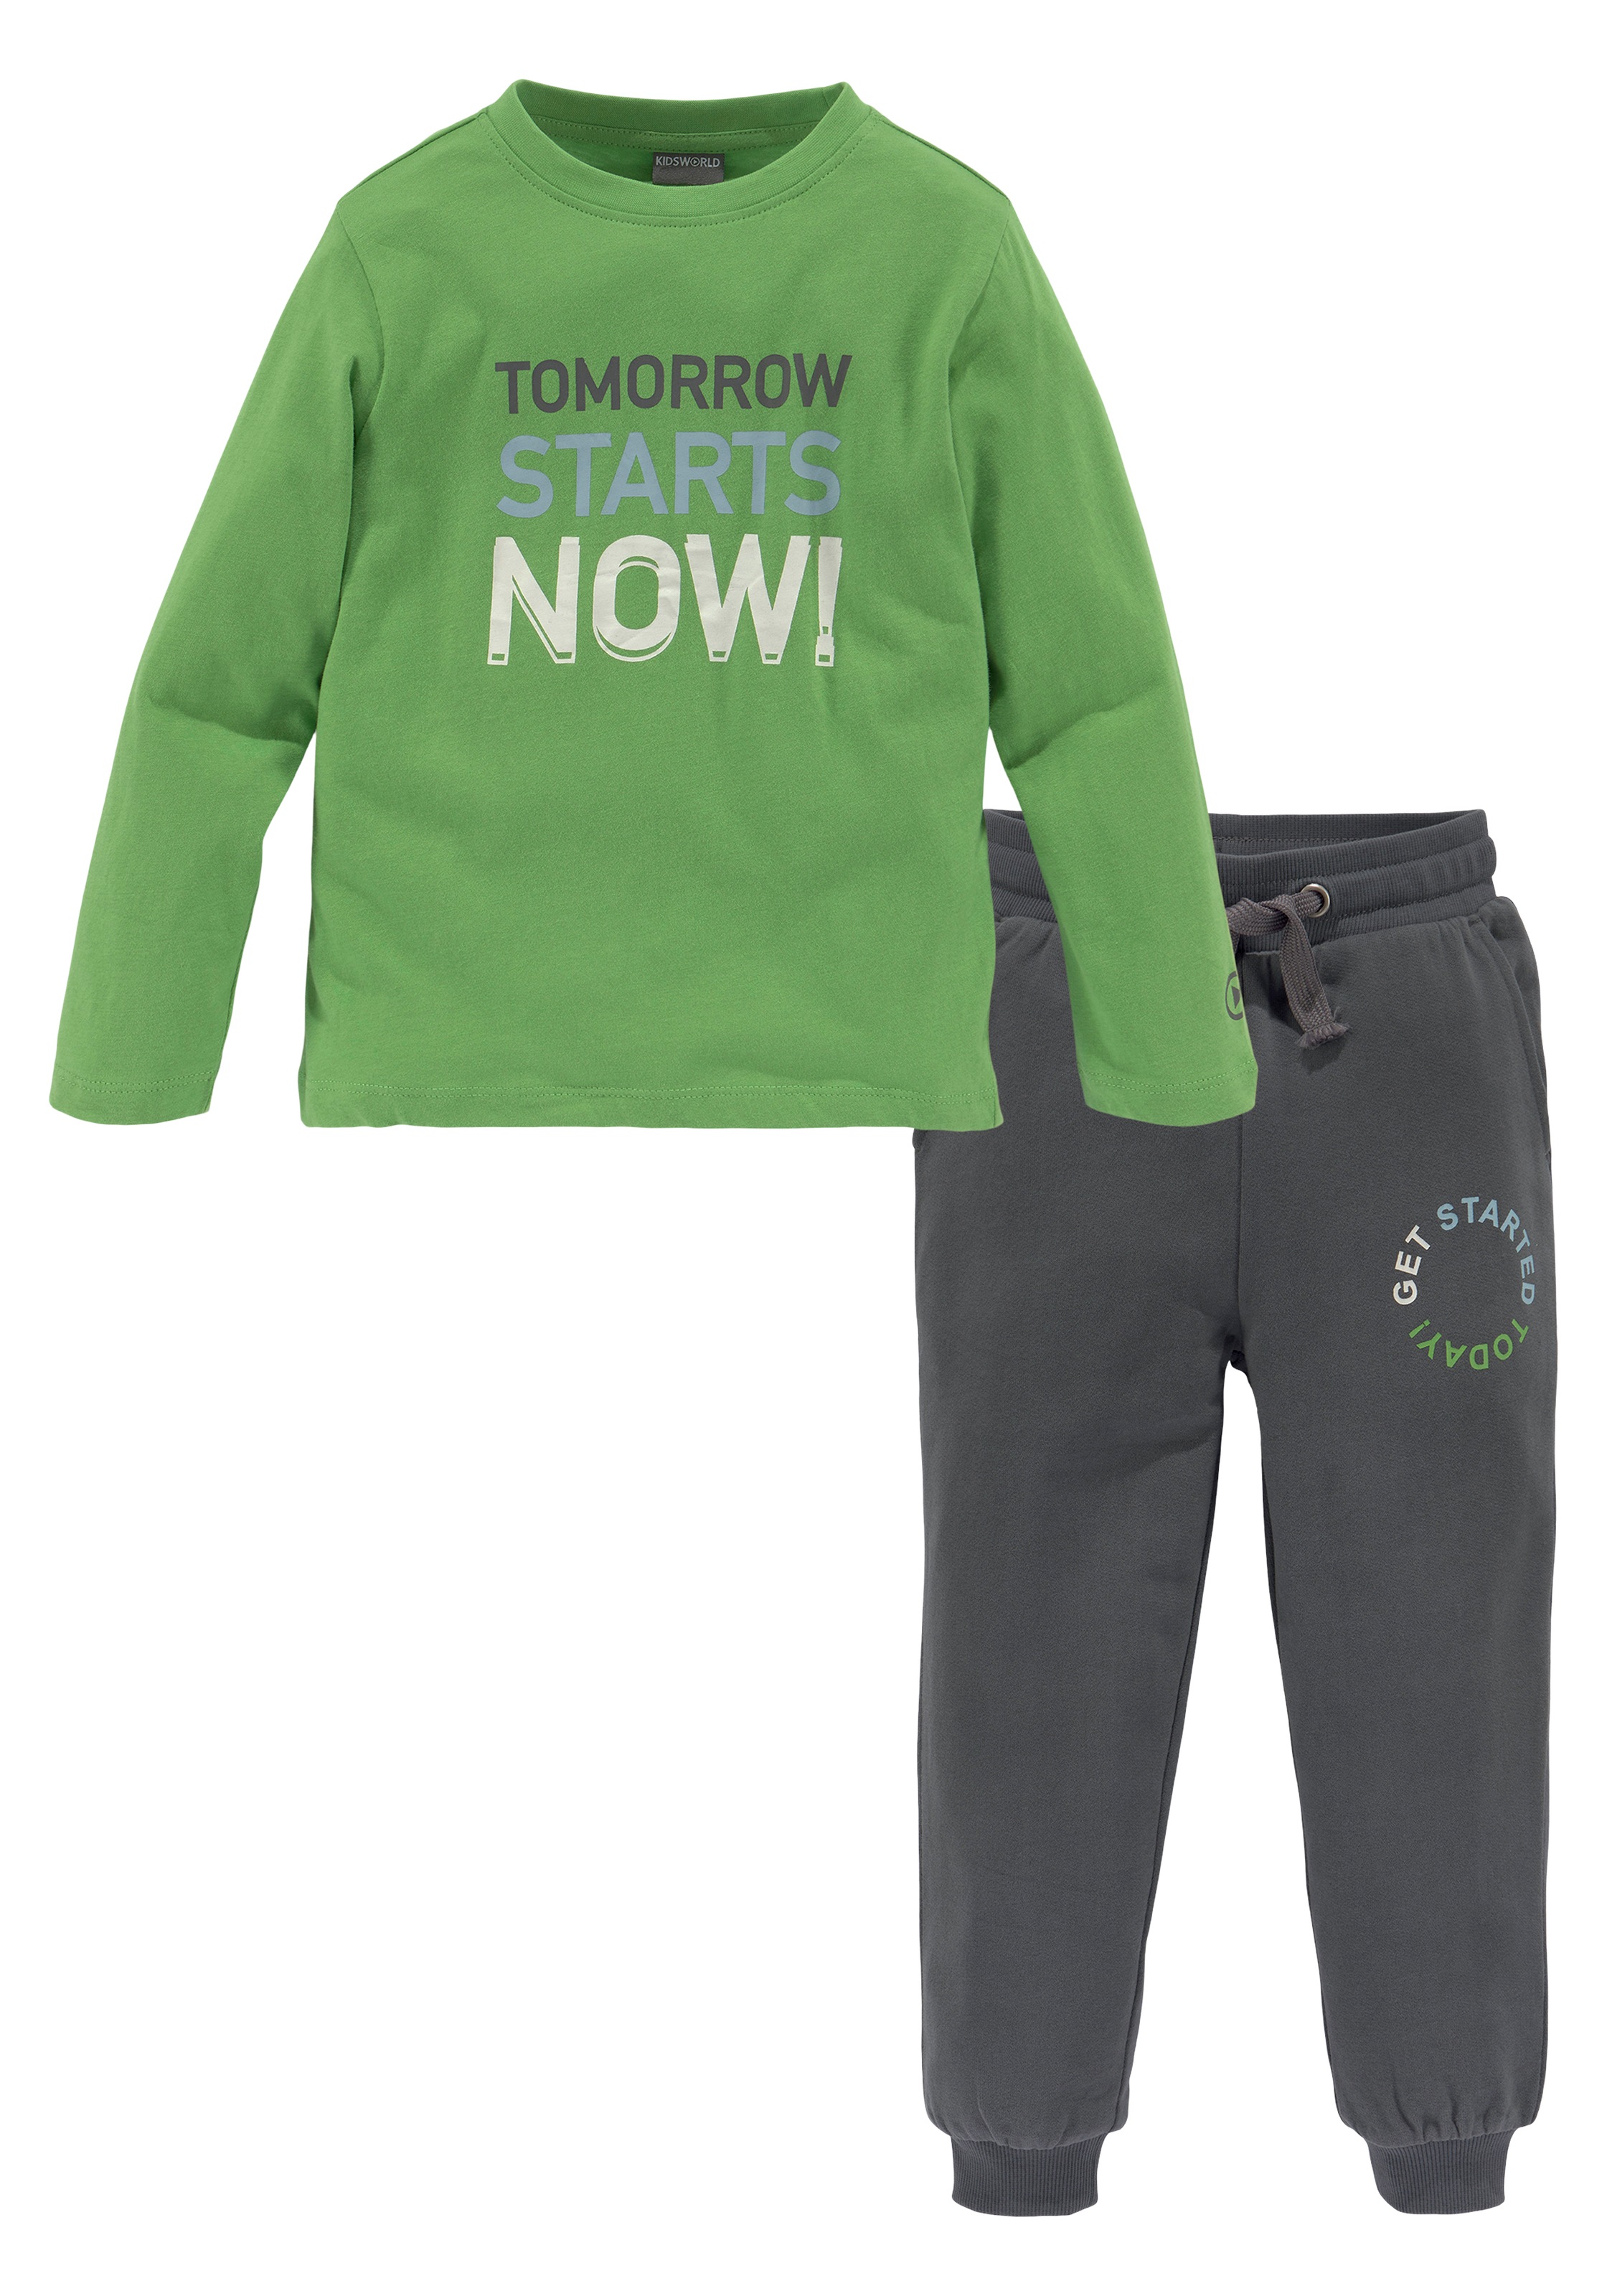 KIDSWORLD Shirt & NOW«, »TOMORROW tlg., Hose STARTS Jogginghose), 2 (Set, LA-Shirt ♕ Spruch bei 